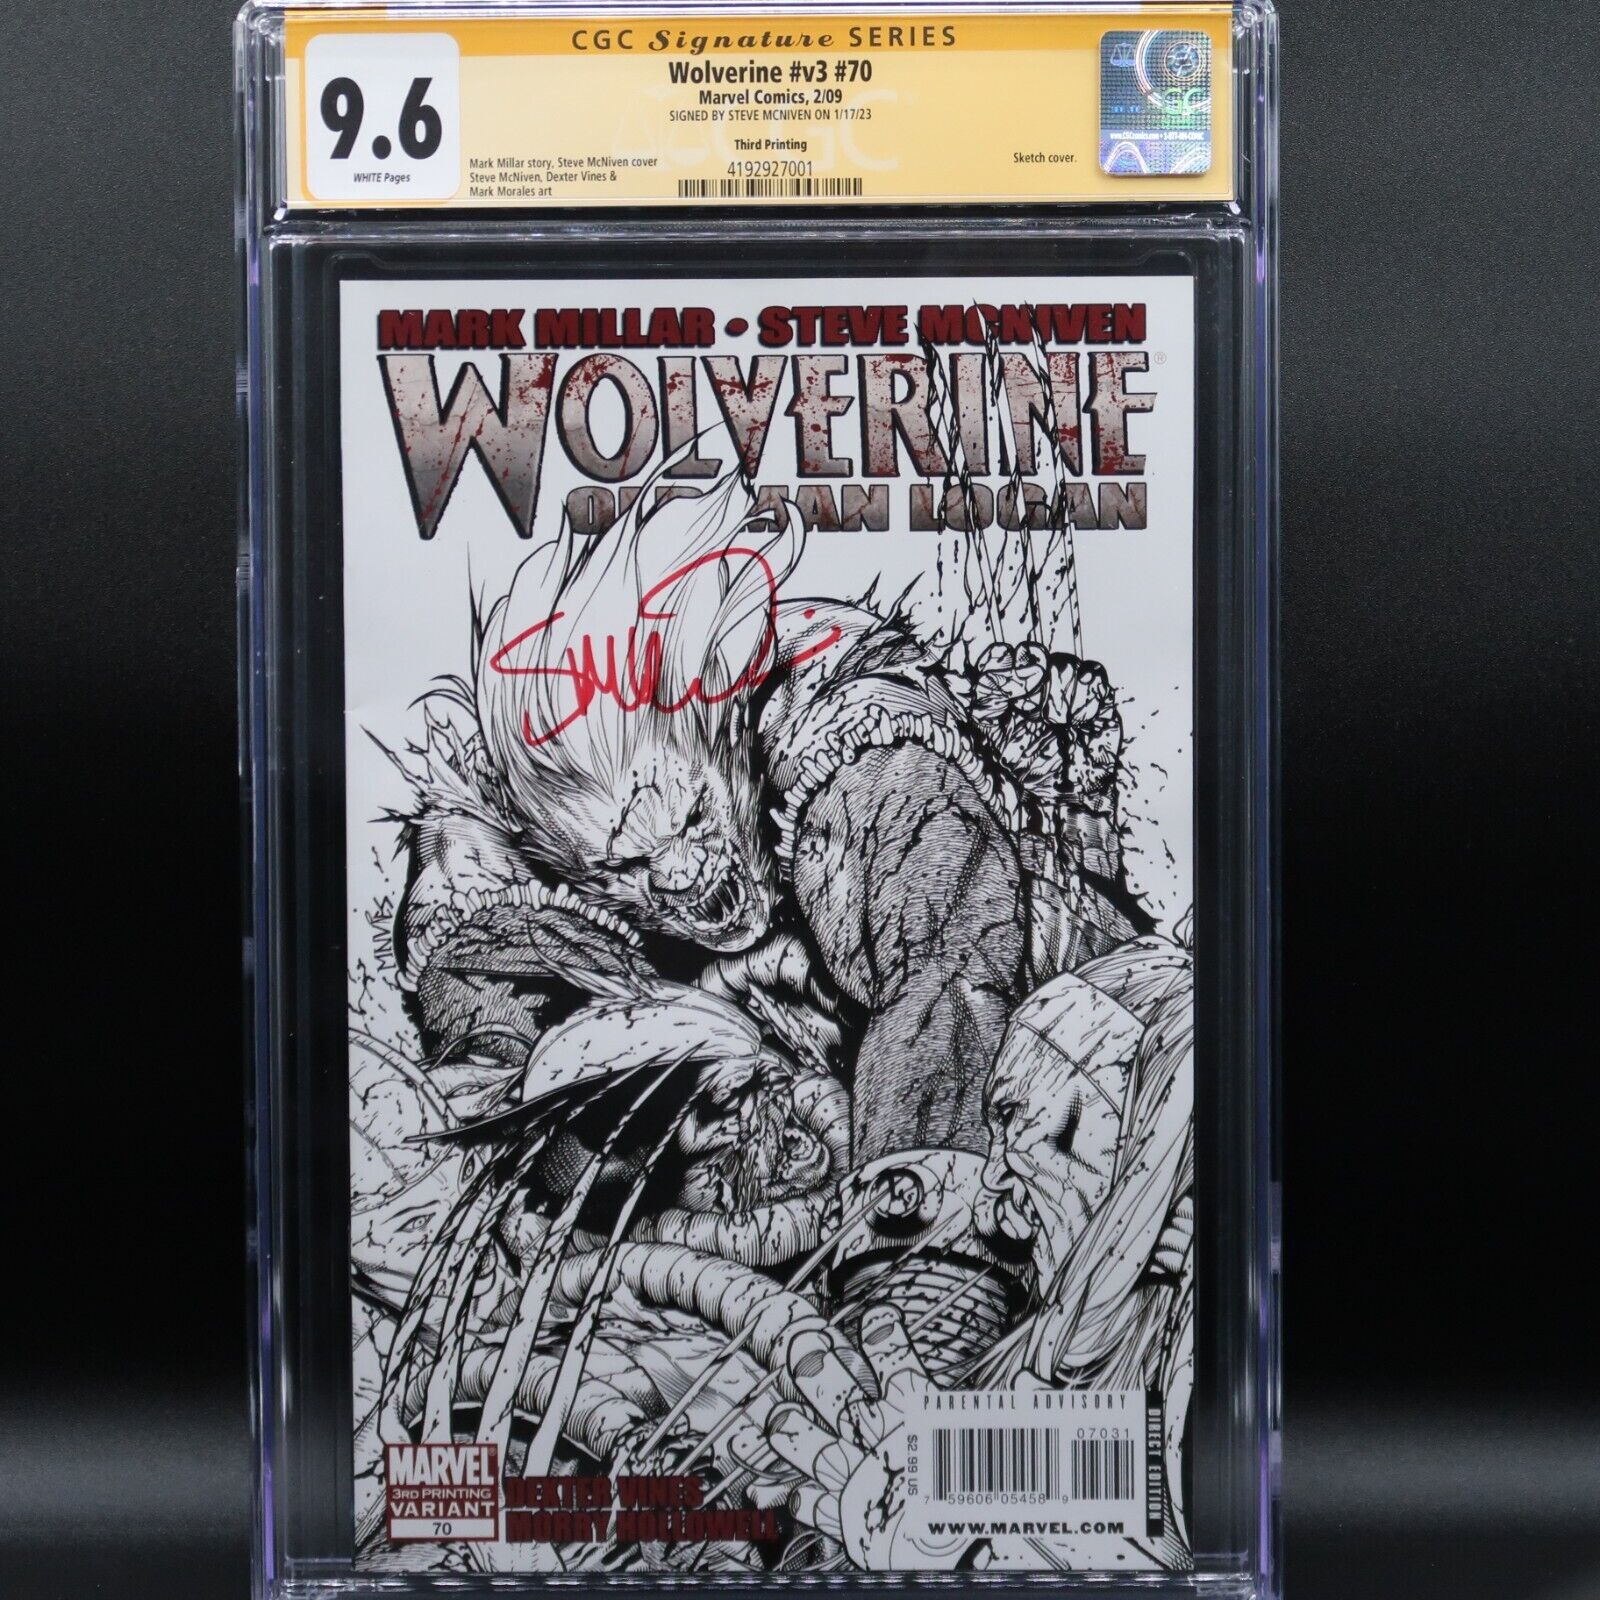 Wolverine #v3 #70 Third Printing - CGC GRADED - SIGNATURE SERIES  